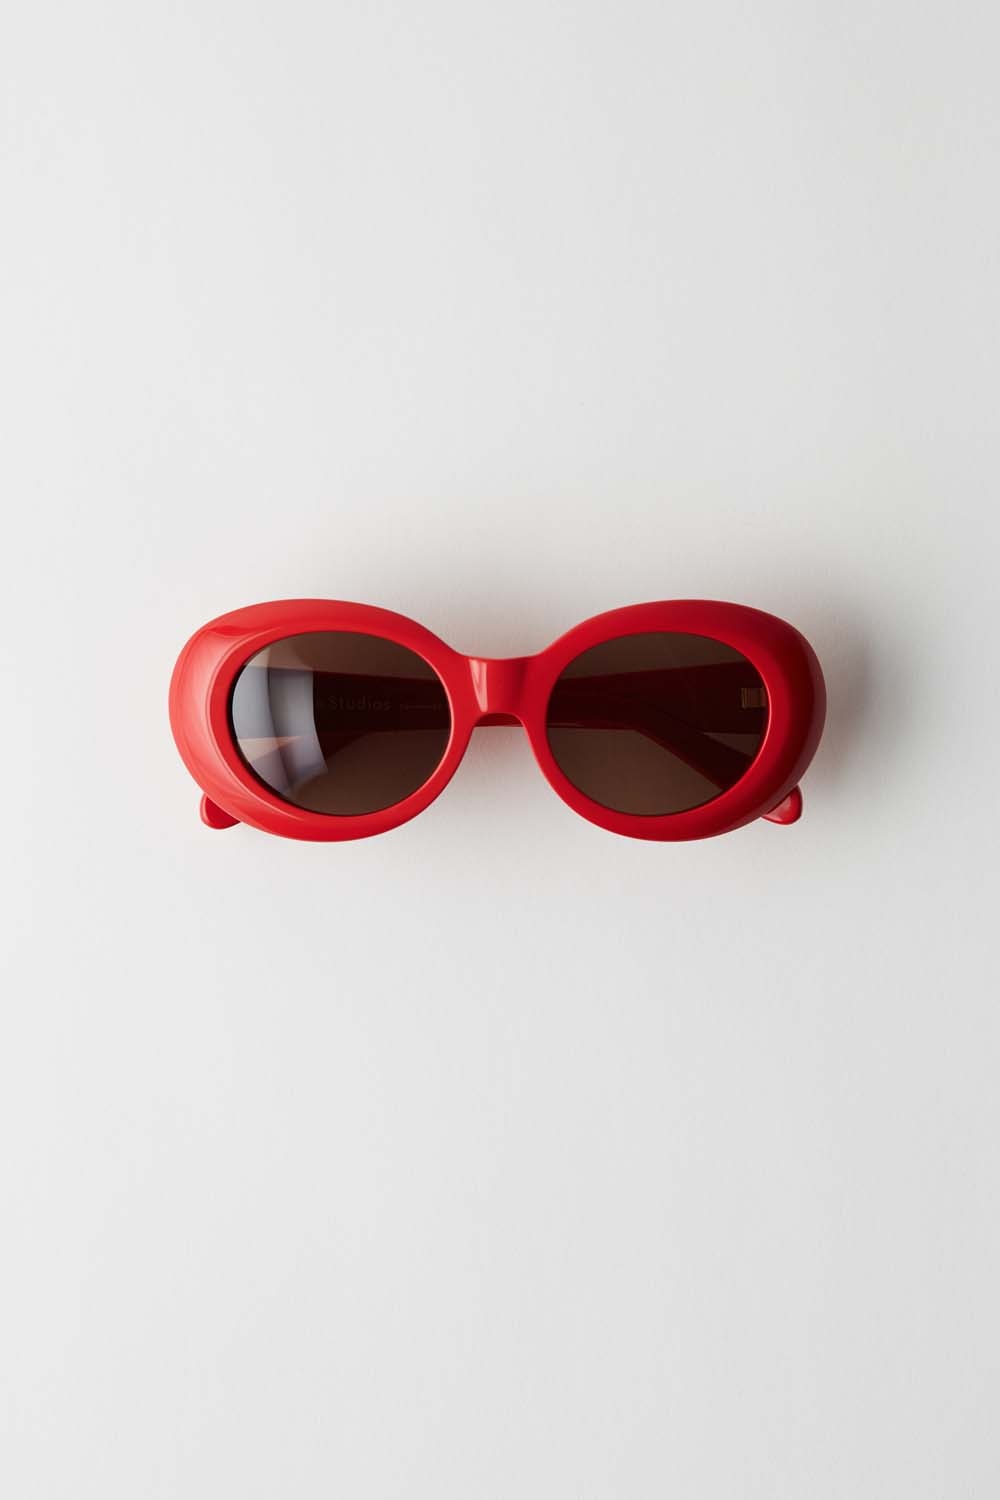 Acne Studios Spring/Summer 2019 Denim Collection Denim Jacket Sunglasses